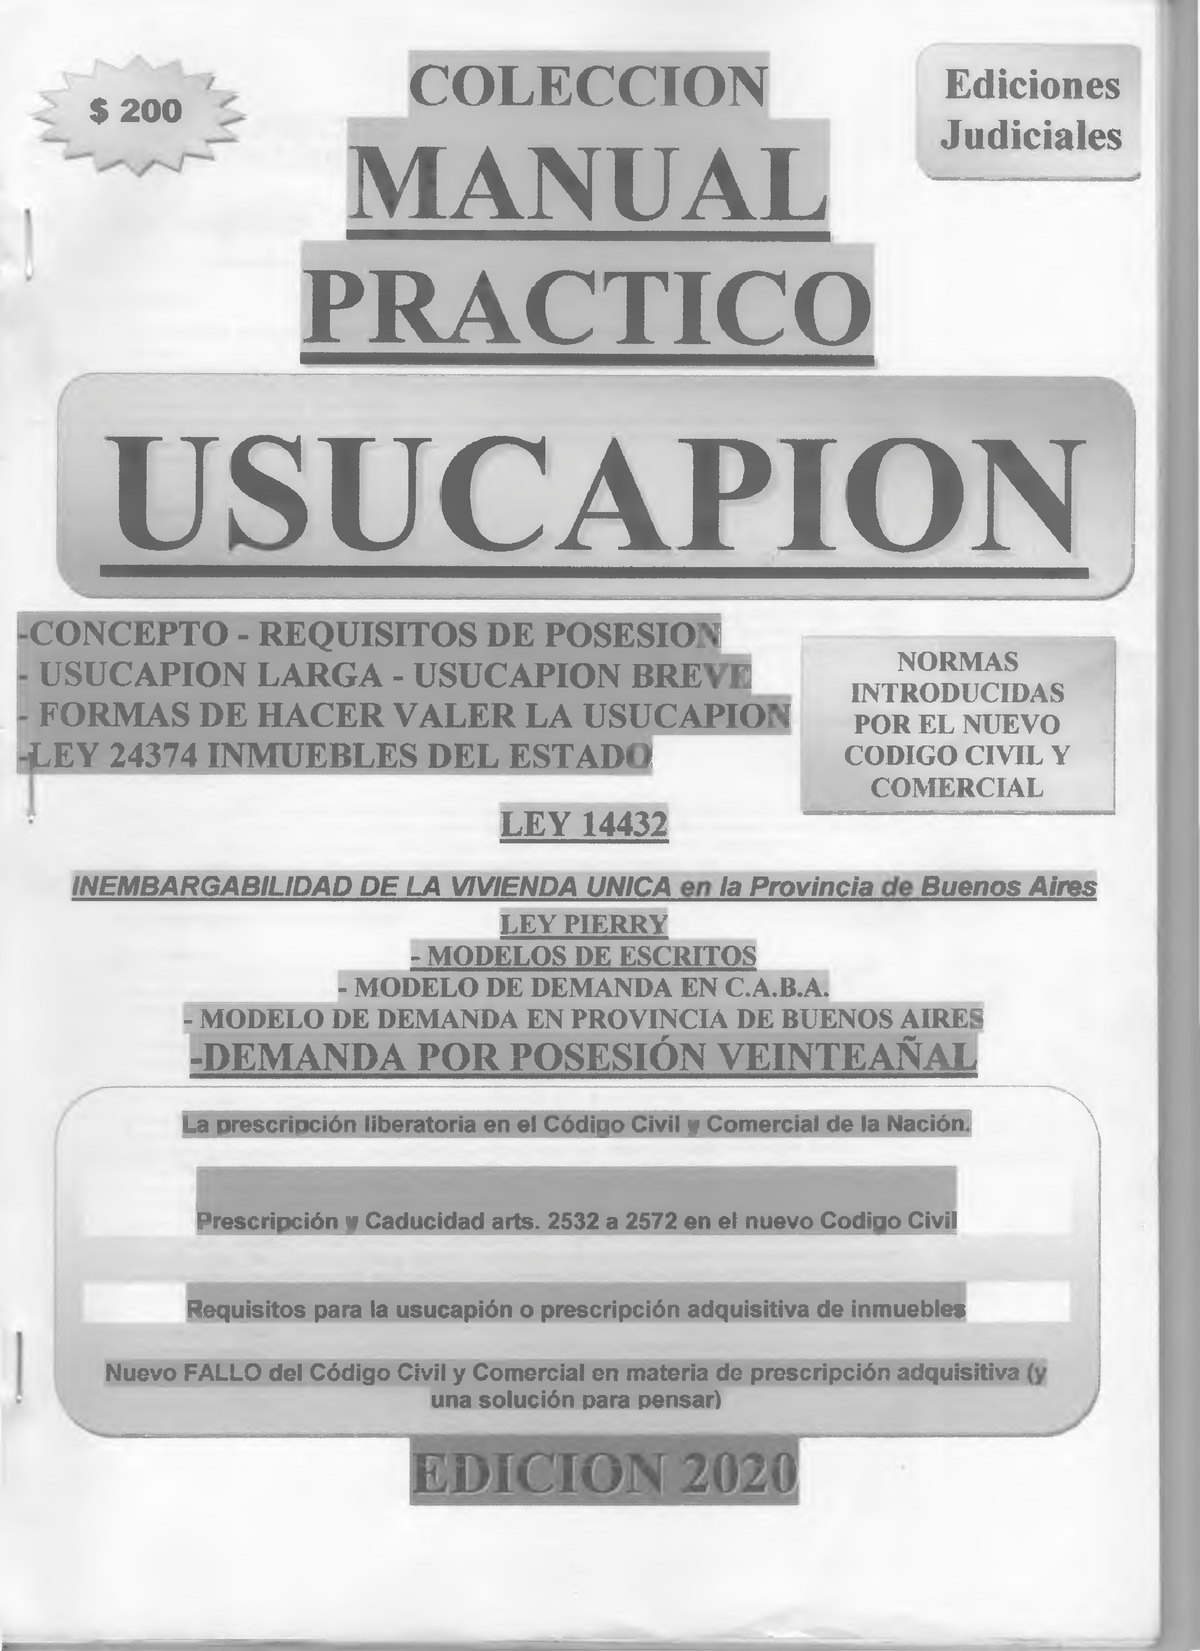 446963619 Guia Practica Usucapion - $ 2 0 0 tOLECCI ON MANUAL PRACTICO  Ediciones Judiciales - Studocu